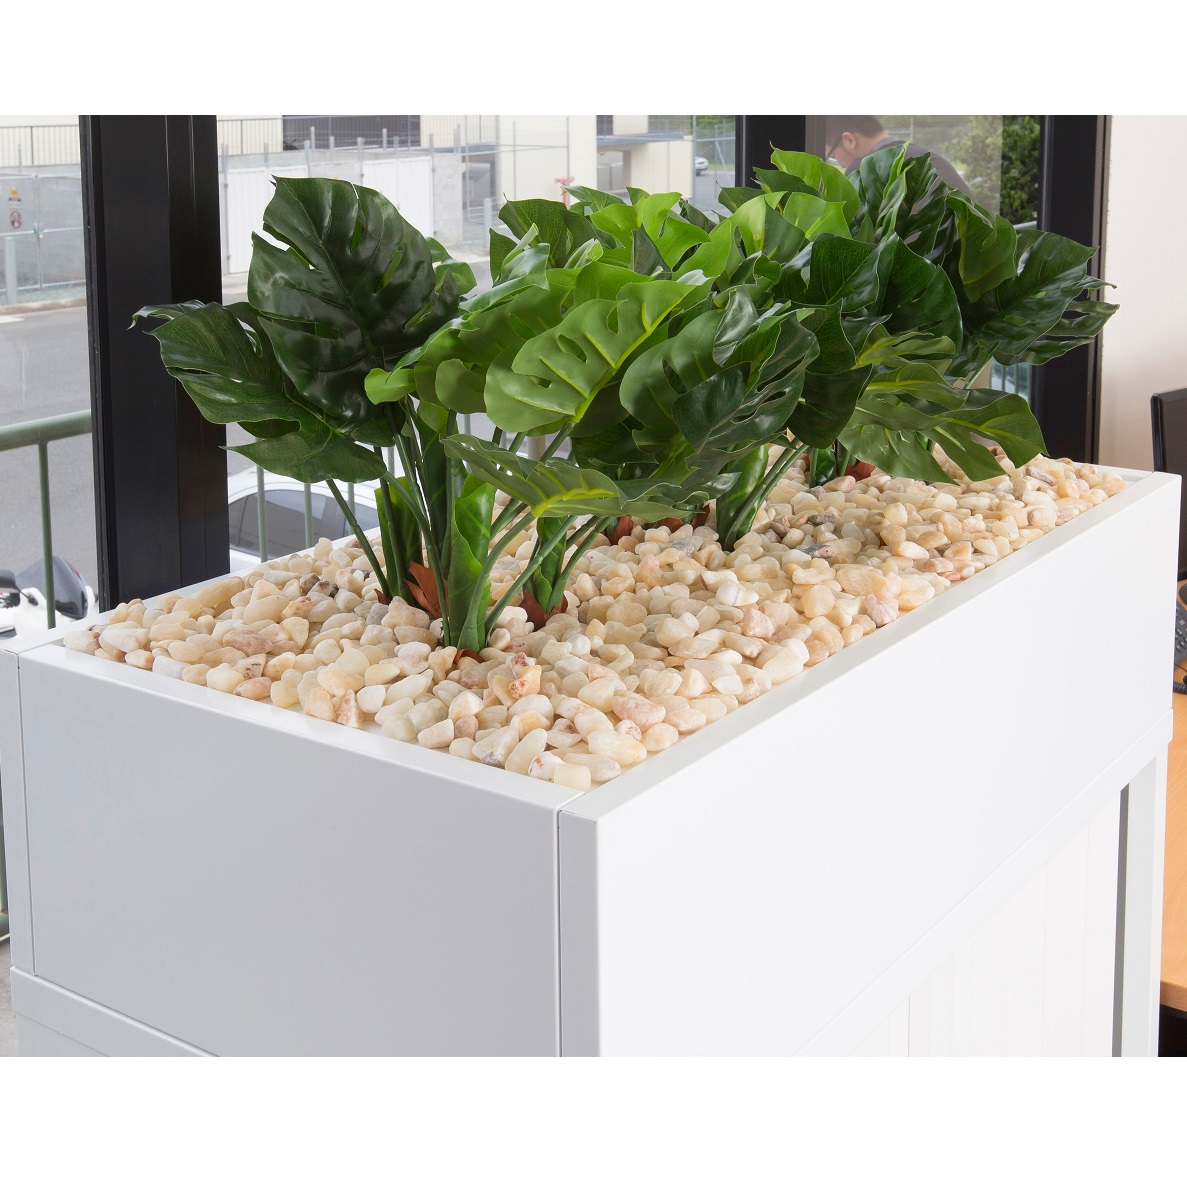 Go Planter Box in office